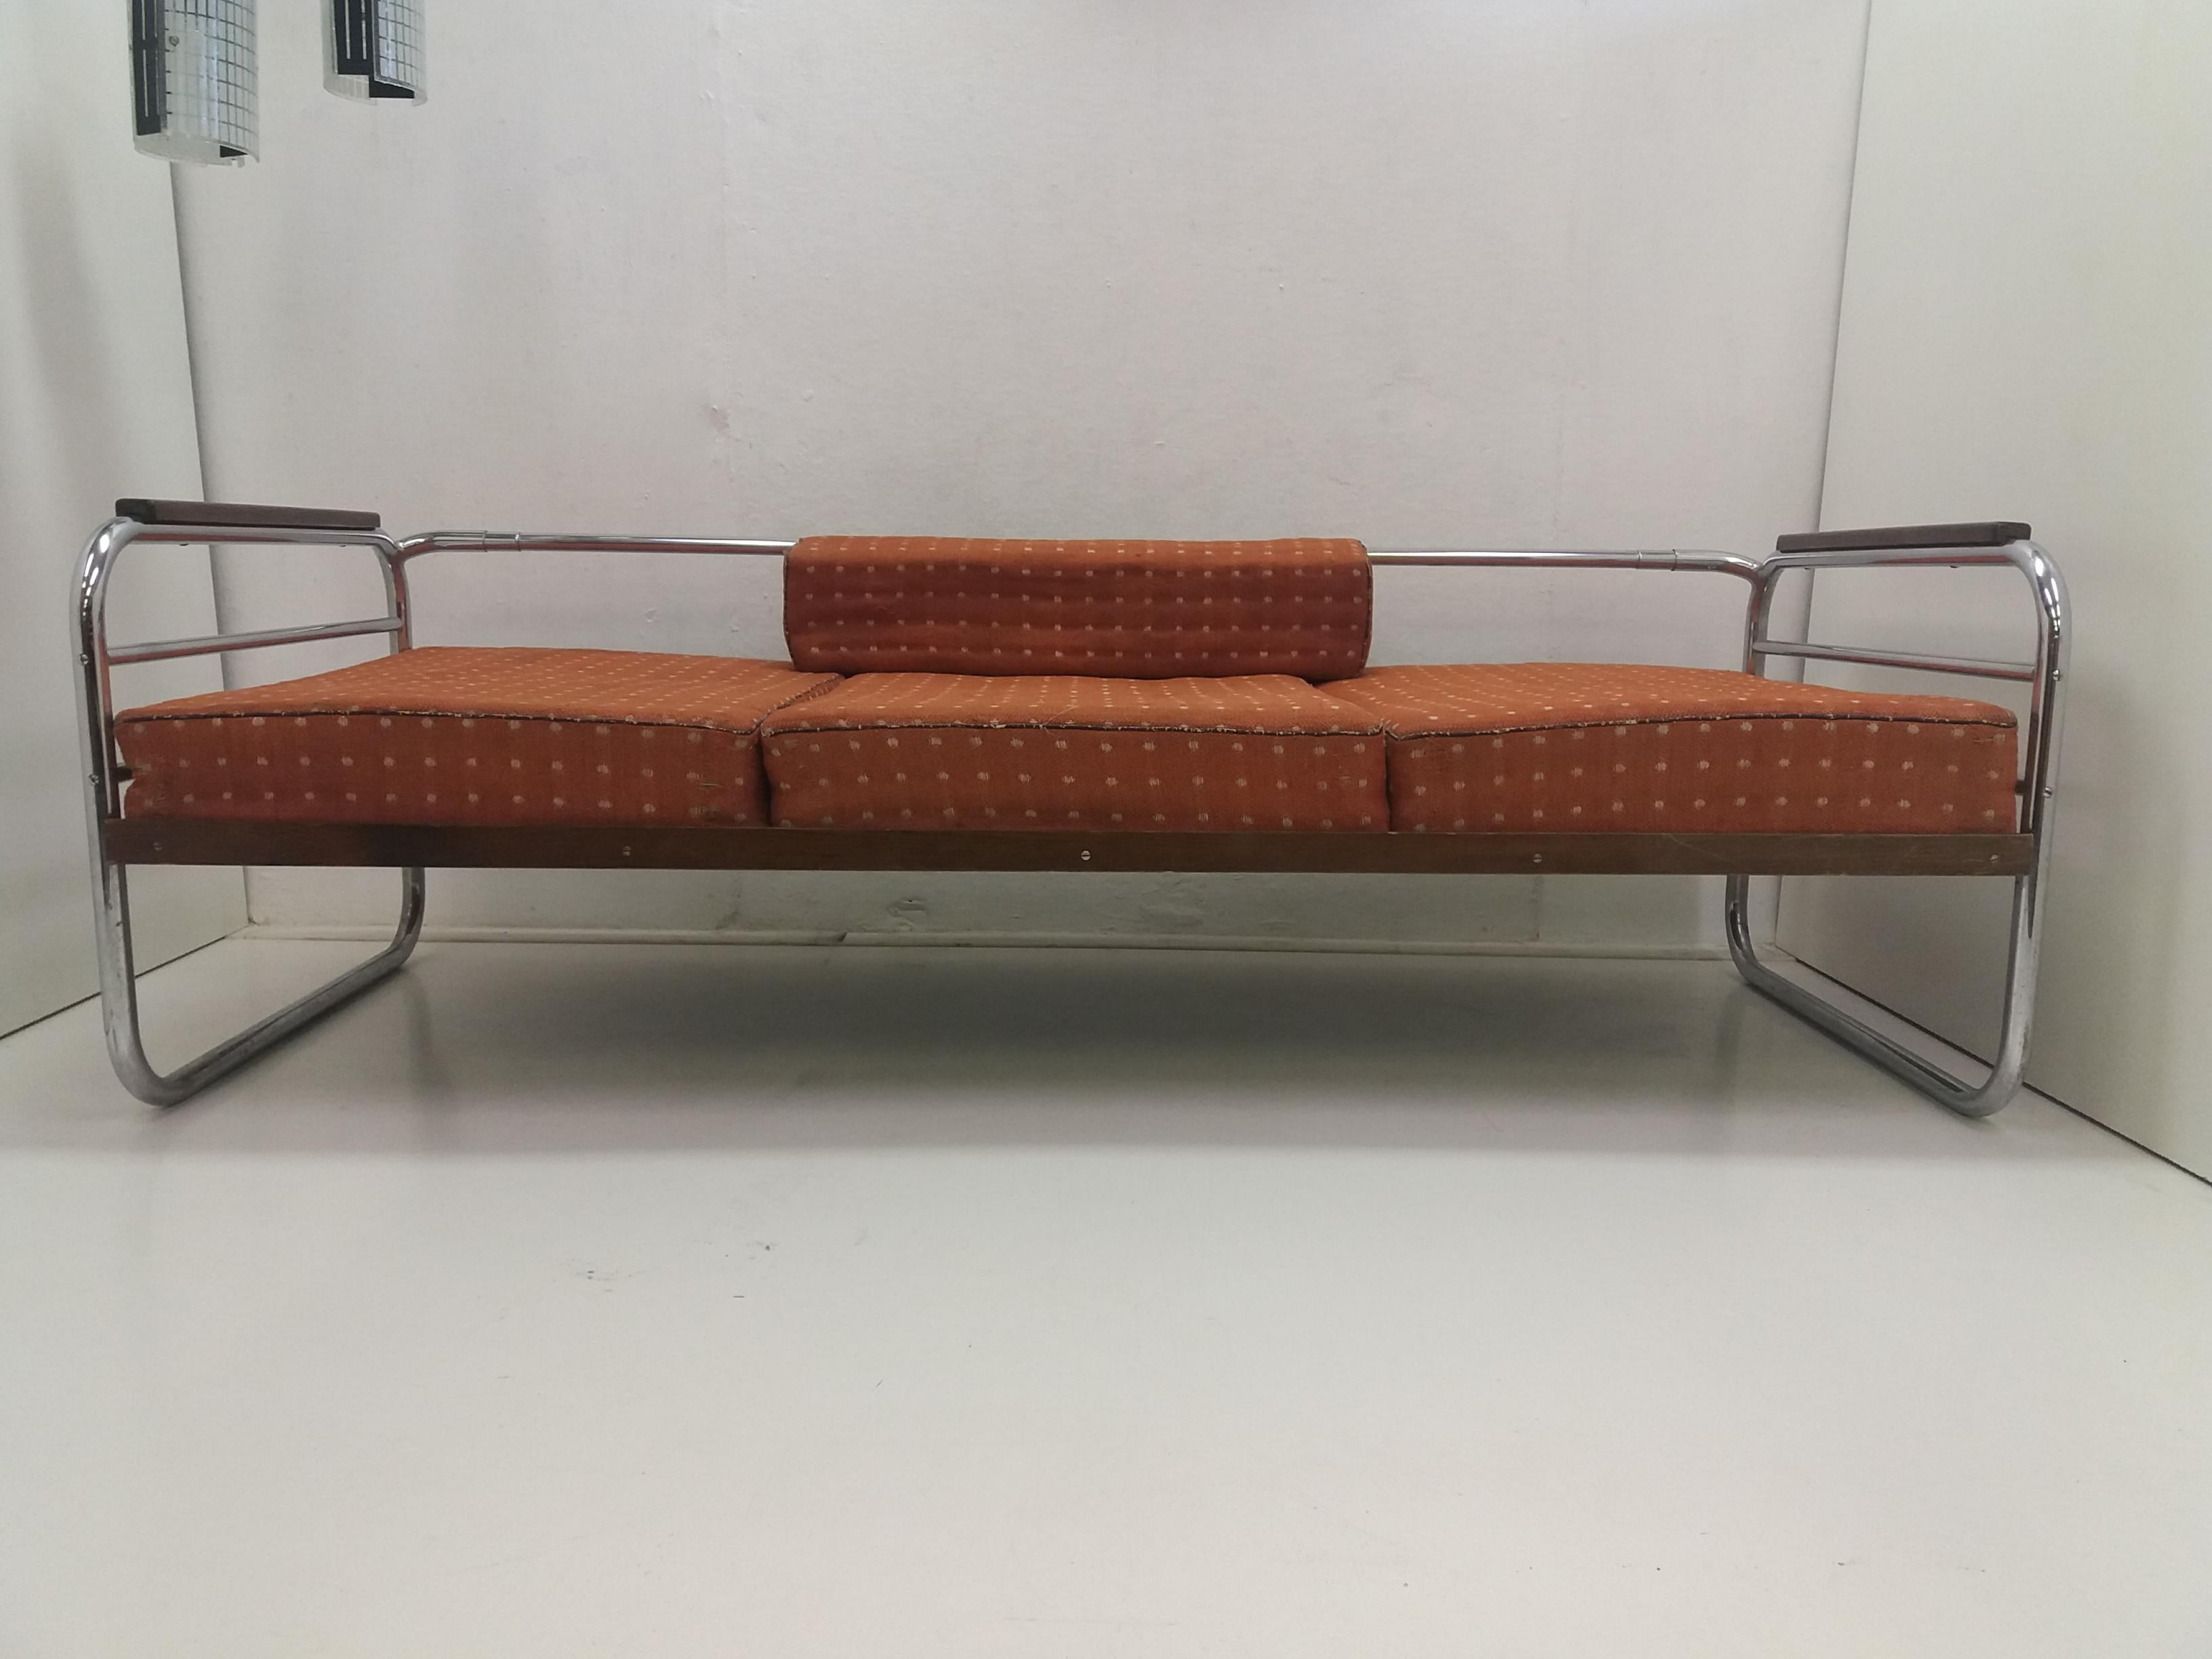 - Made in Czechoslovakia
- Made of chrome, fabric
- Original upholstery
- Dimensions of mattress: W 185cm x D 83cm
- Good, original condition.